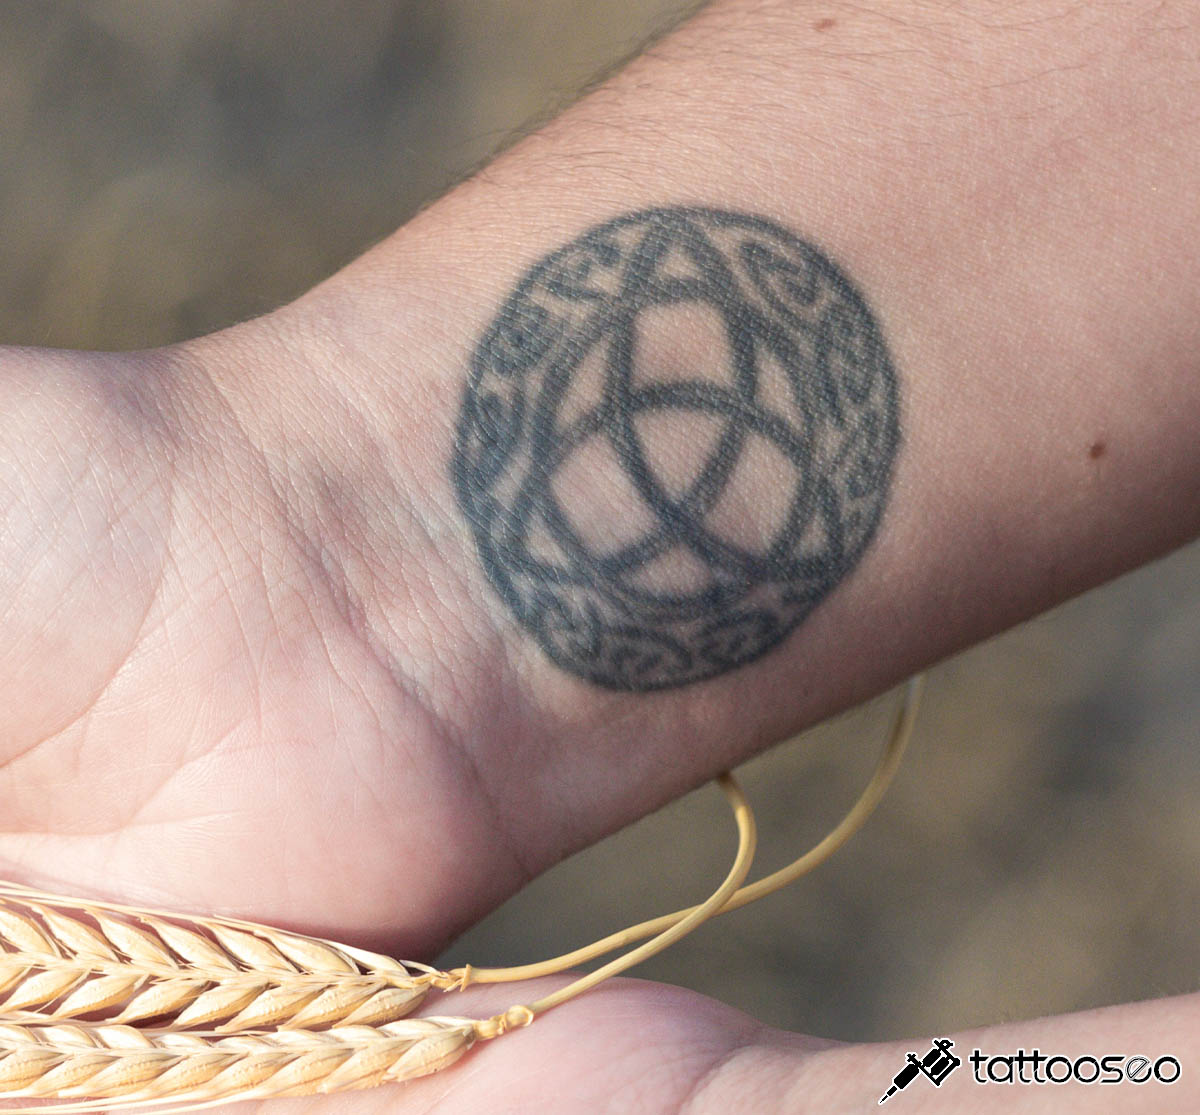 Triquetra Tattoo Meaning, Designs & Ideas - Tattoo SEO